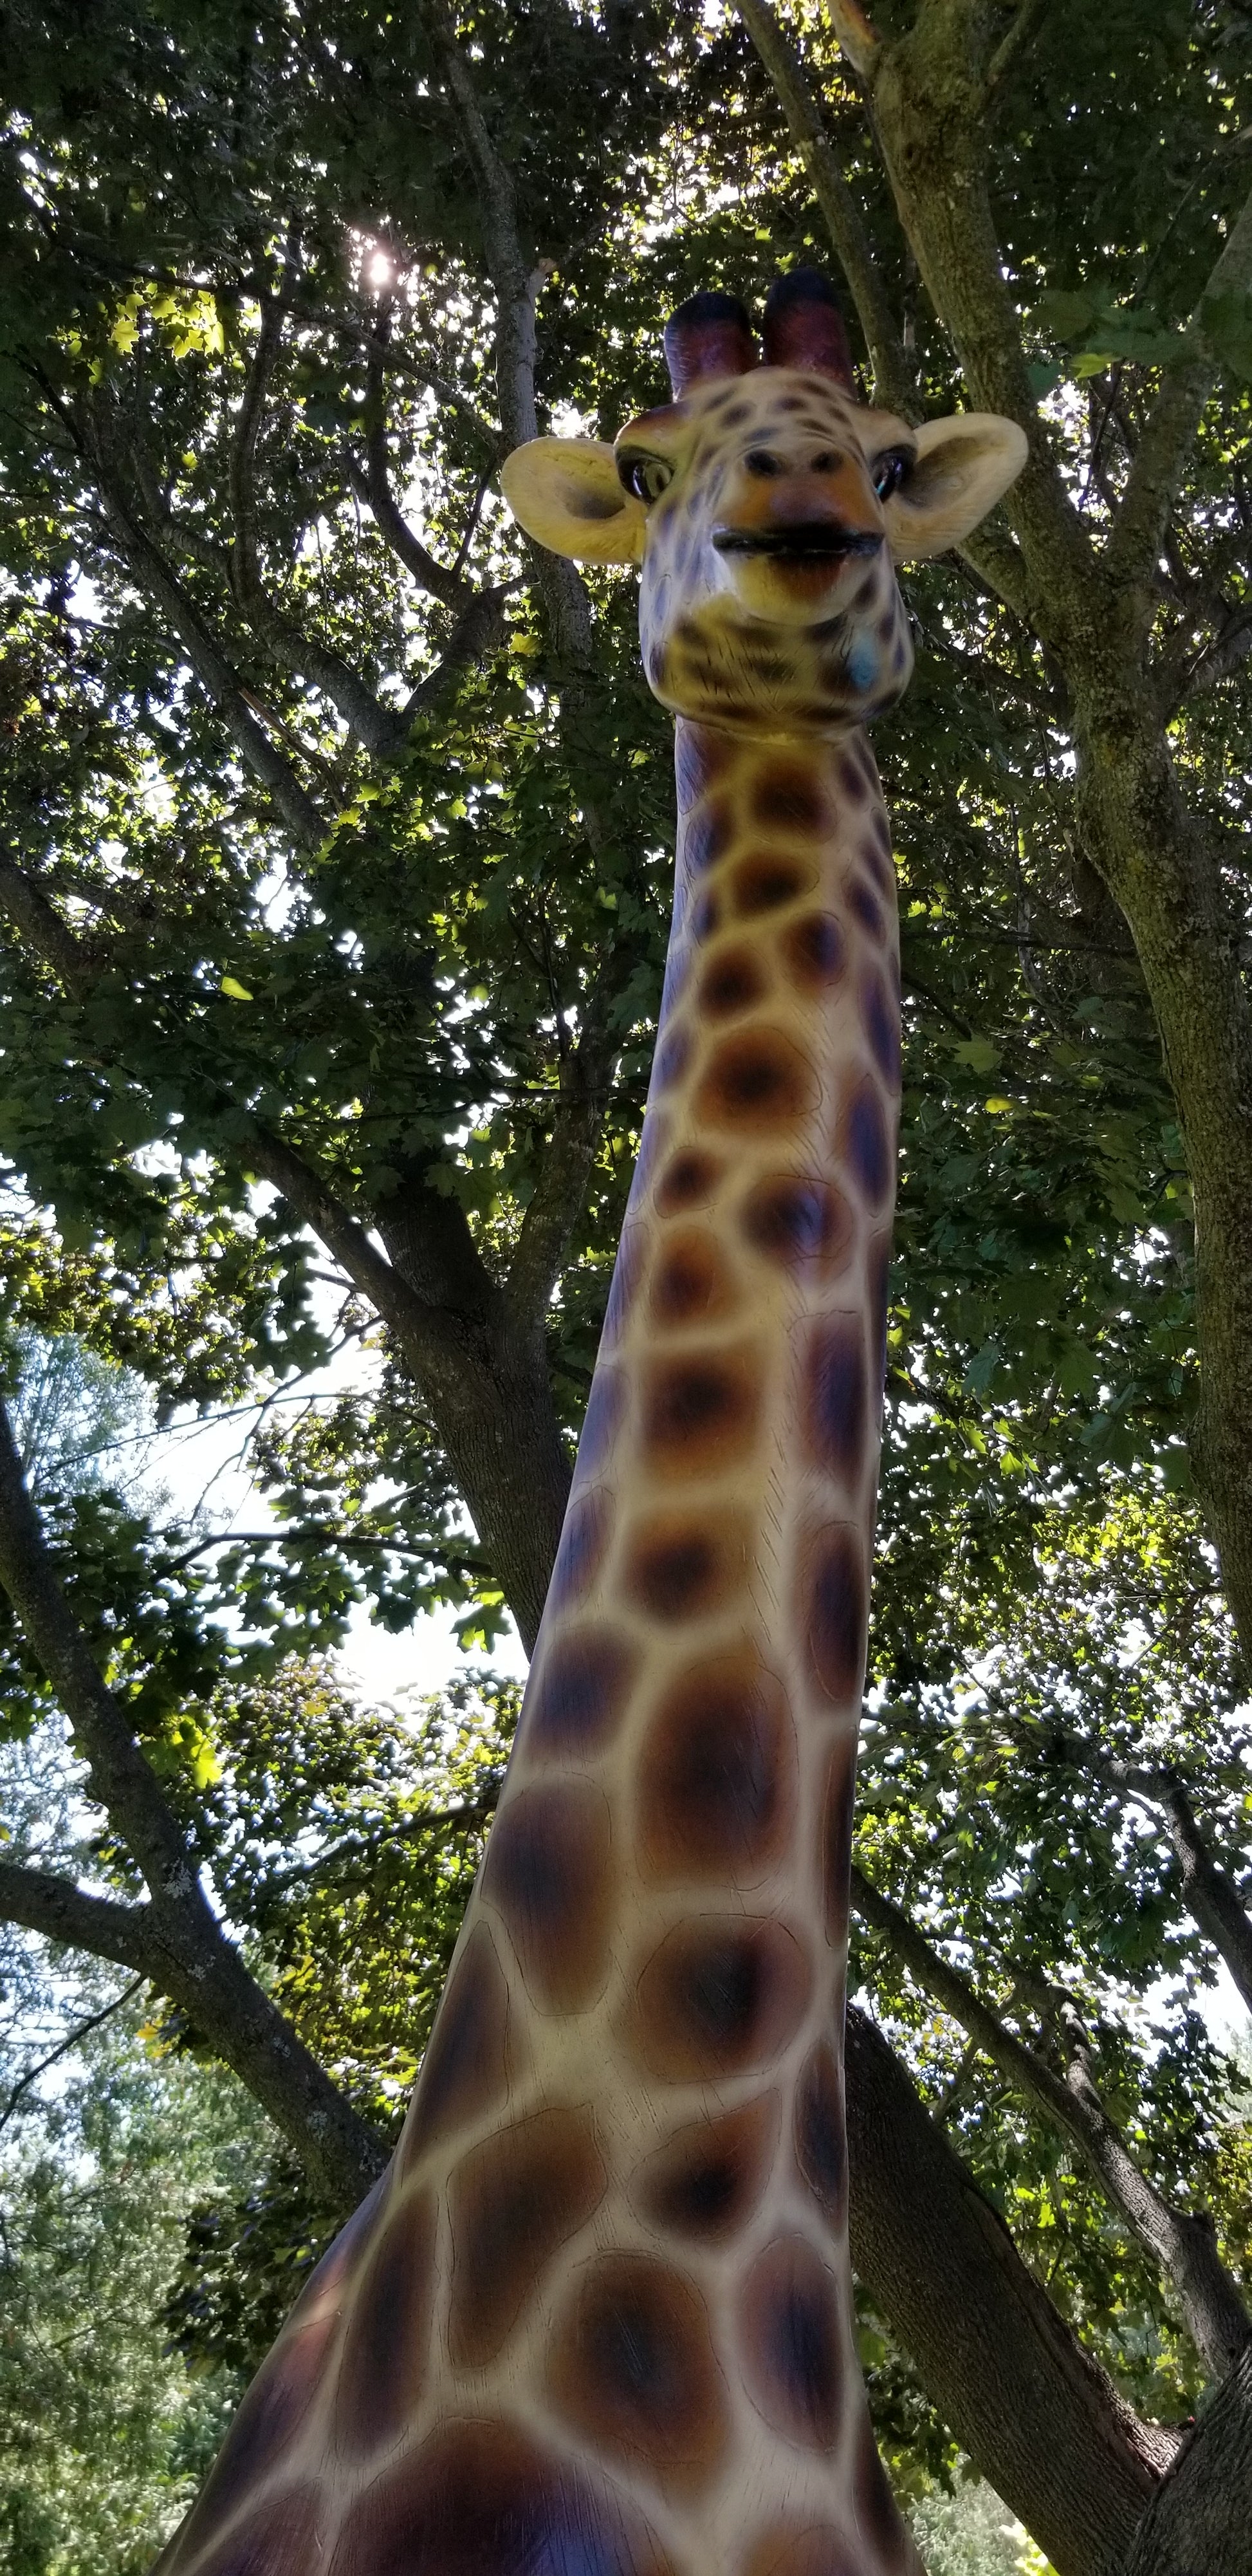 giraffe statue photo from below